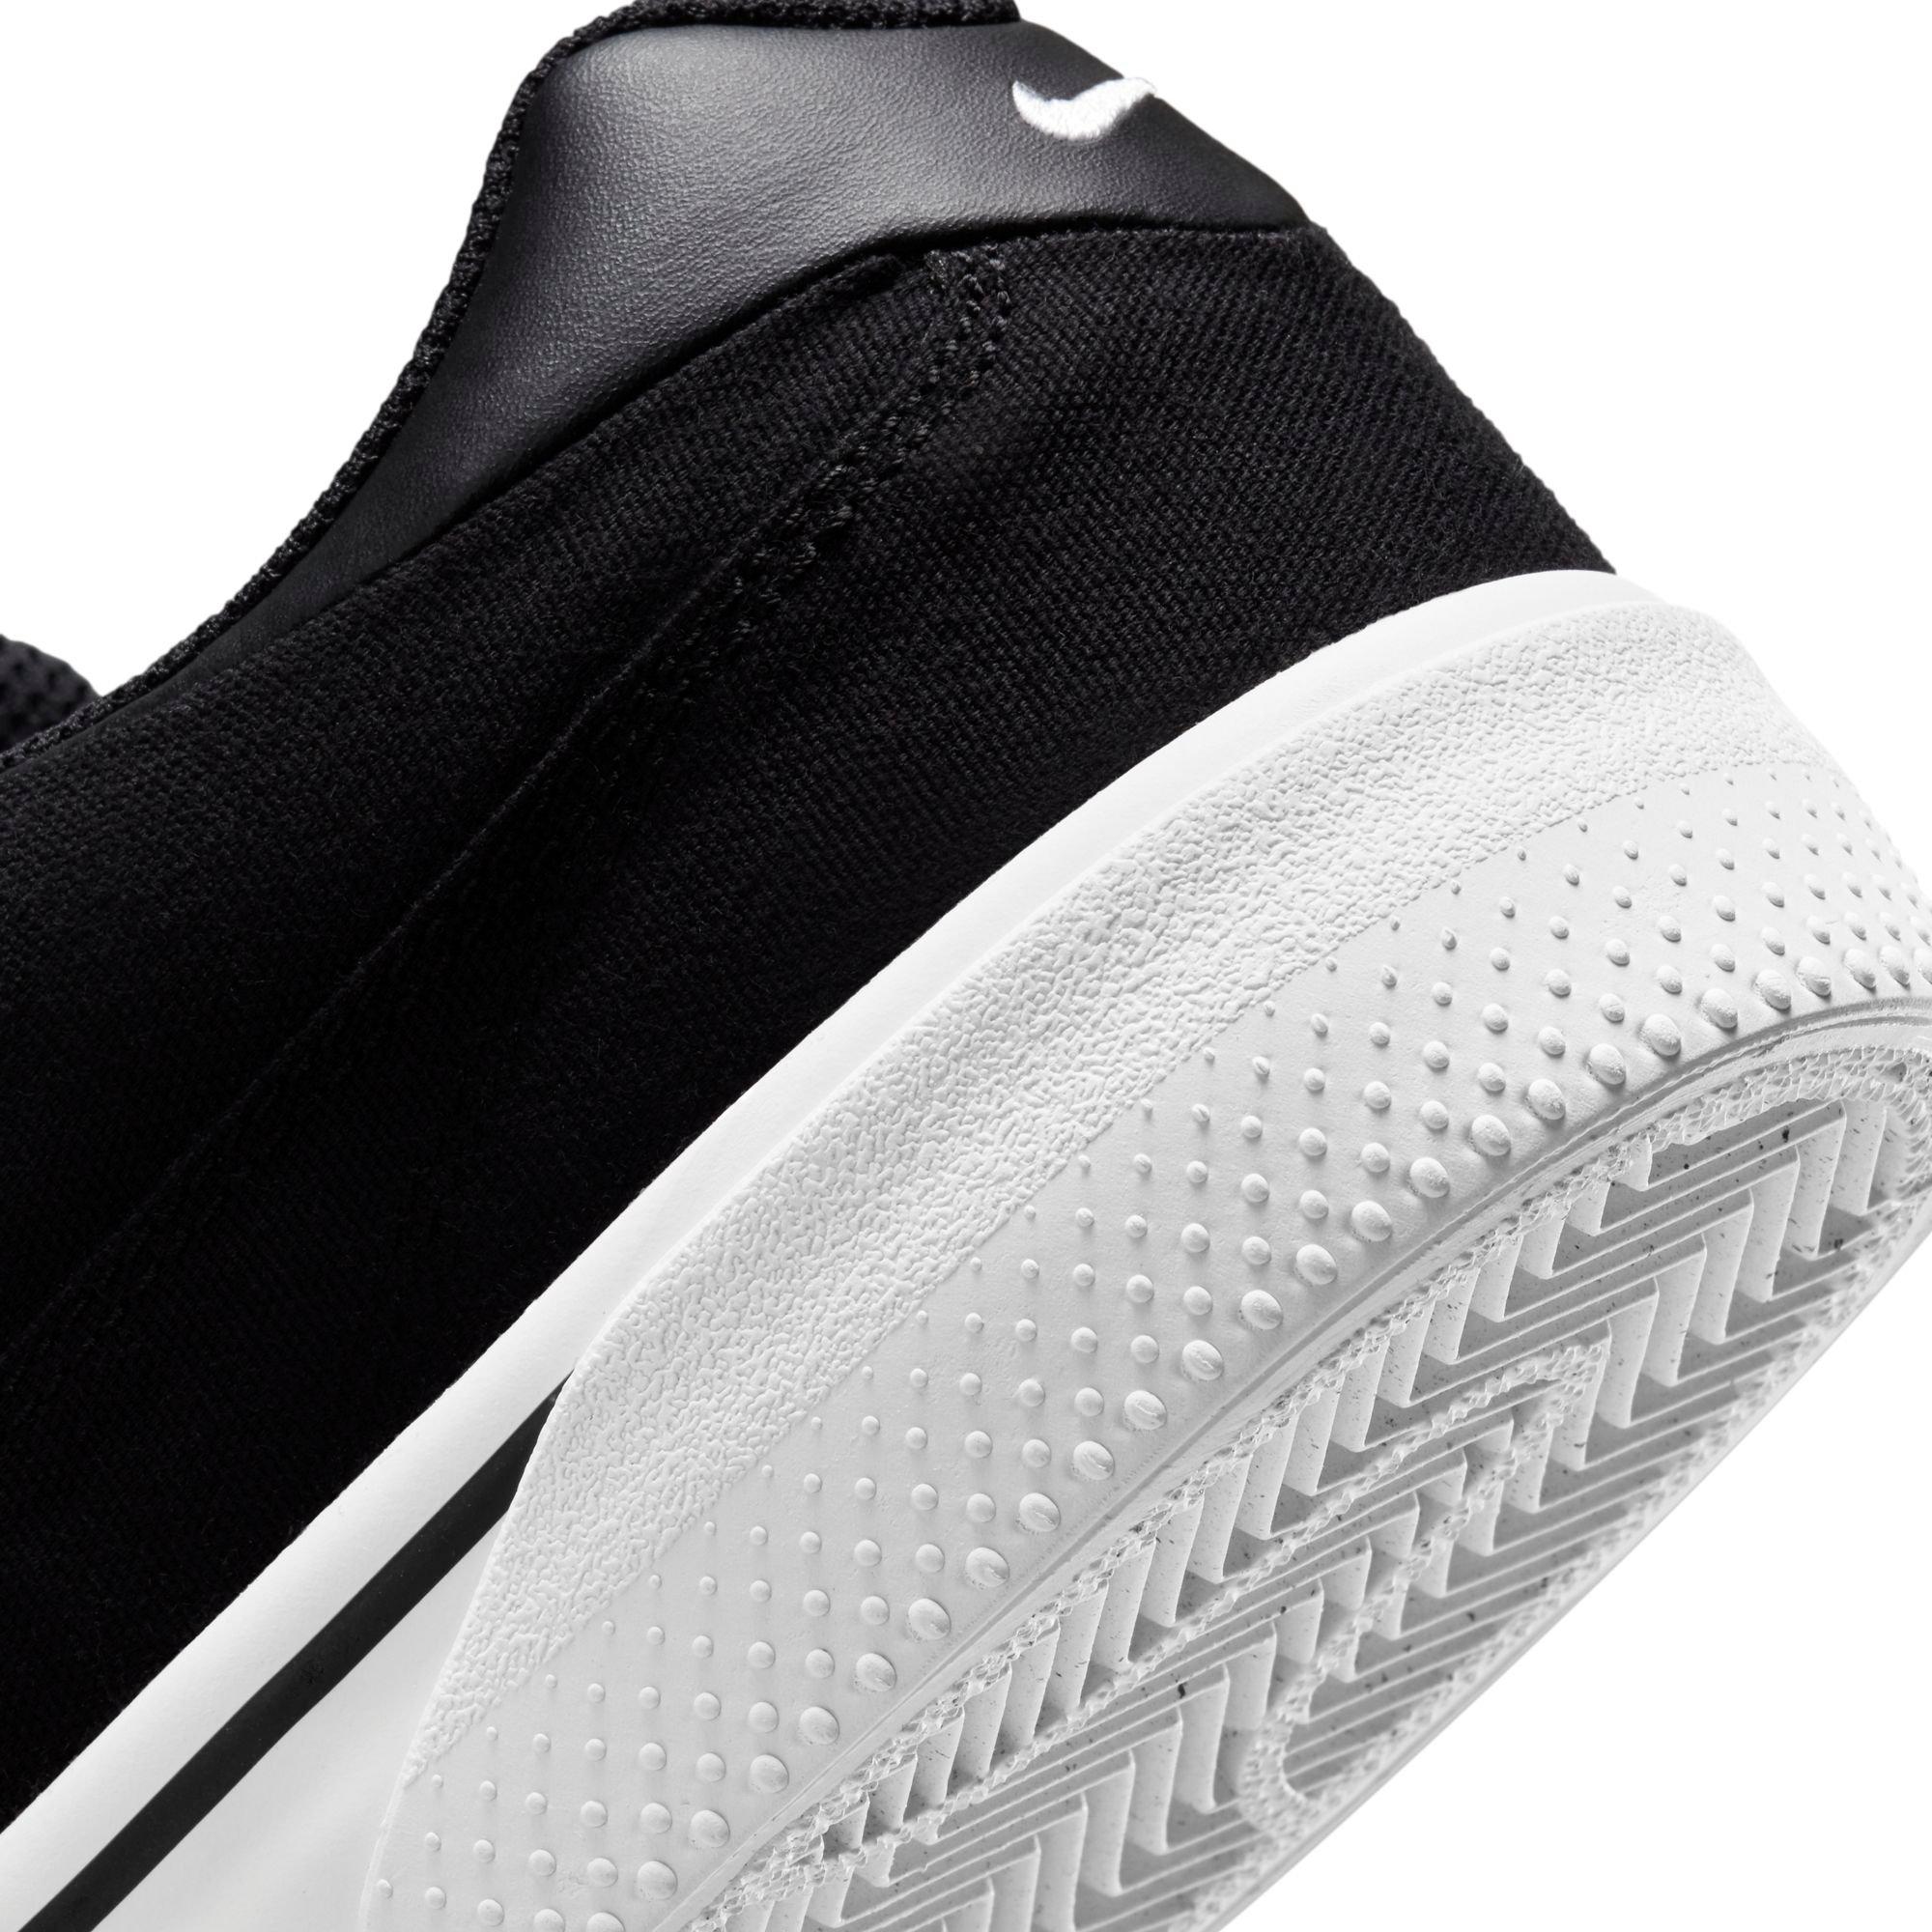 White Nike Mens Retro Gts Sneaker, Color Pop